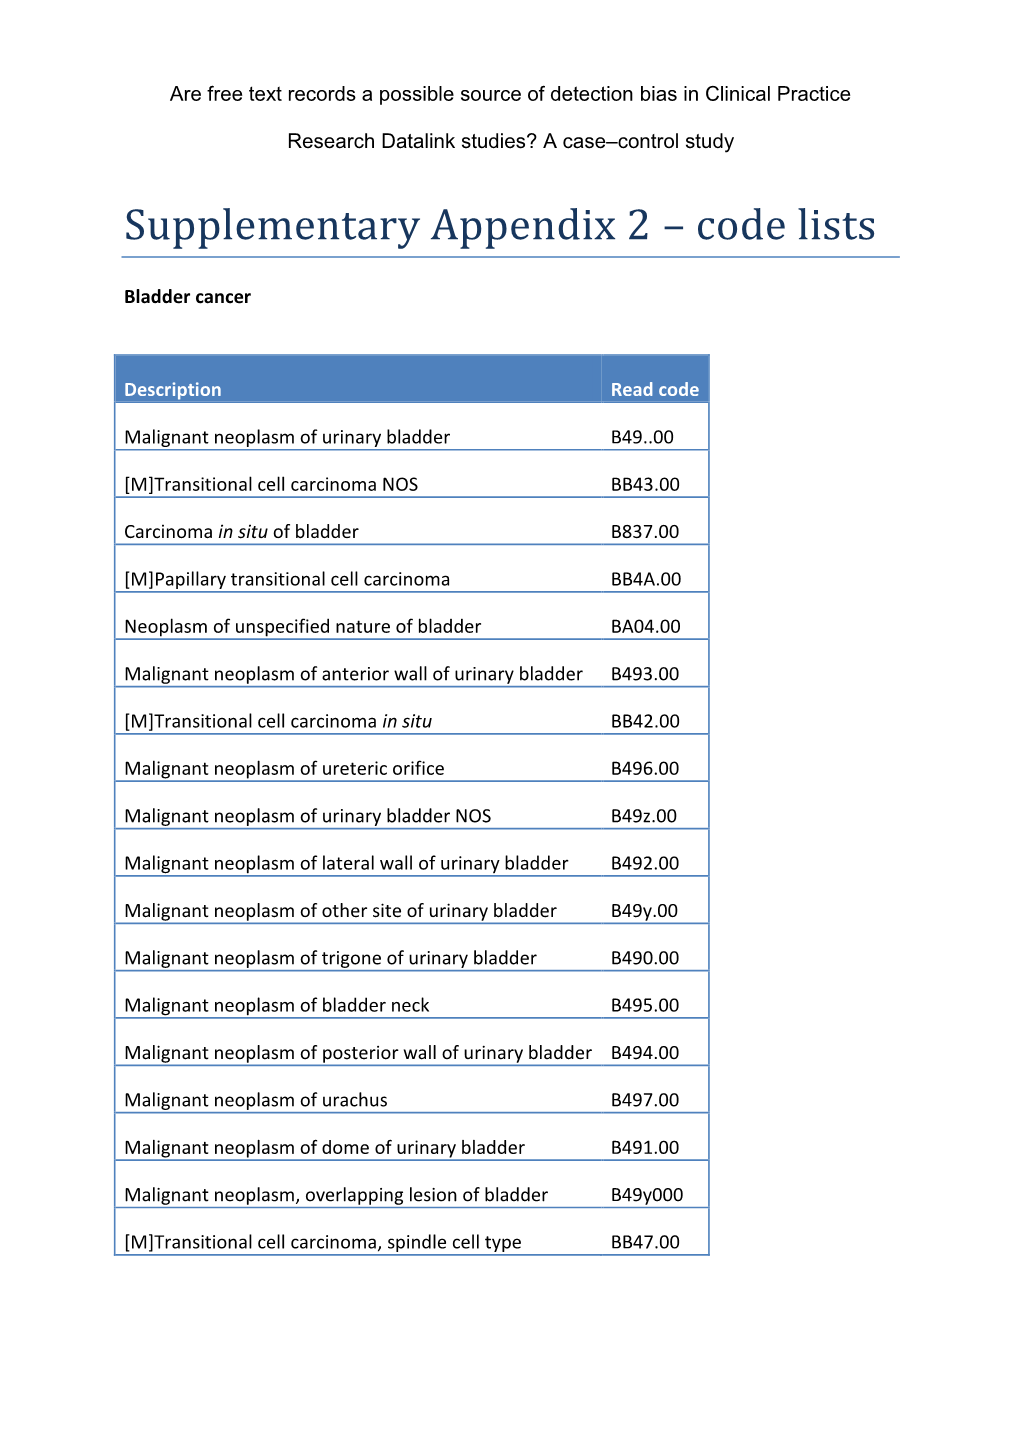 Supplementary Appendix 2 – Code Lists